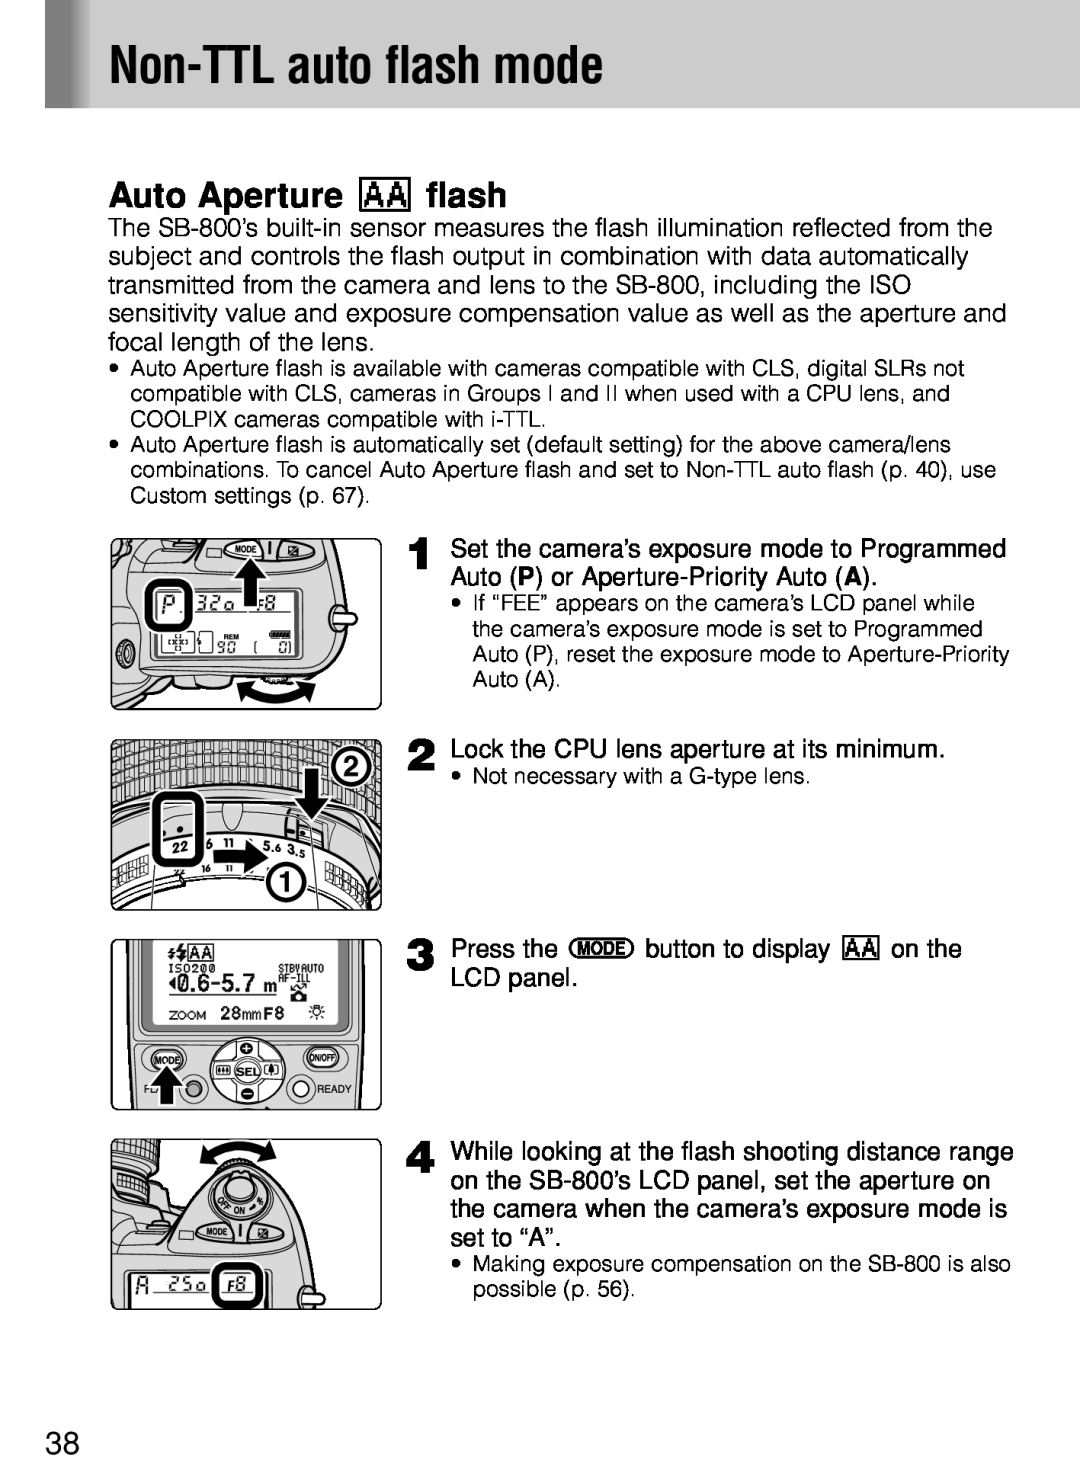 Nikon SB-800 instruction manual Non-TTL auto flash mode, Auto Aperture B flash 